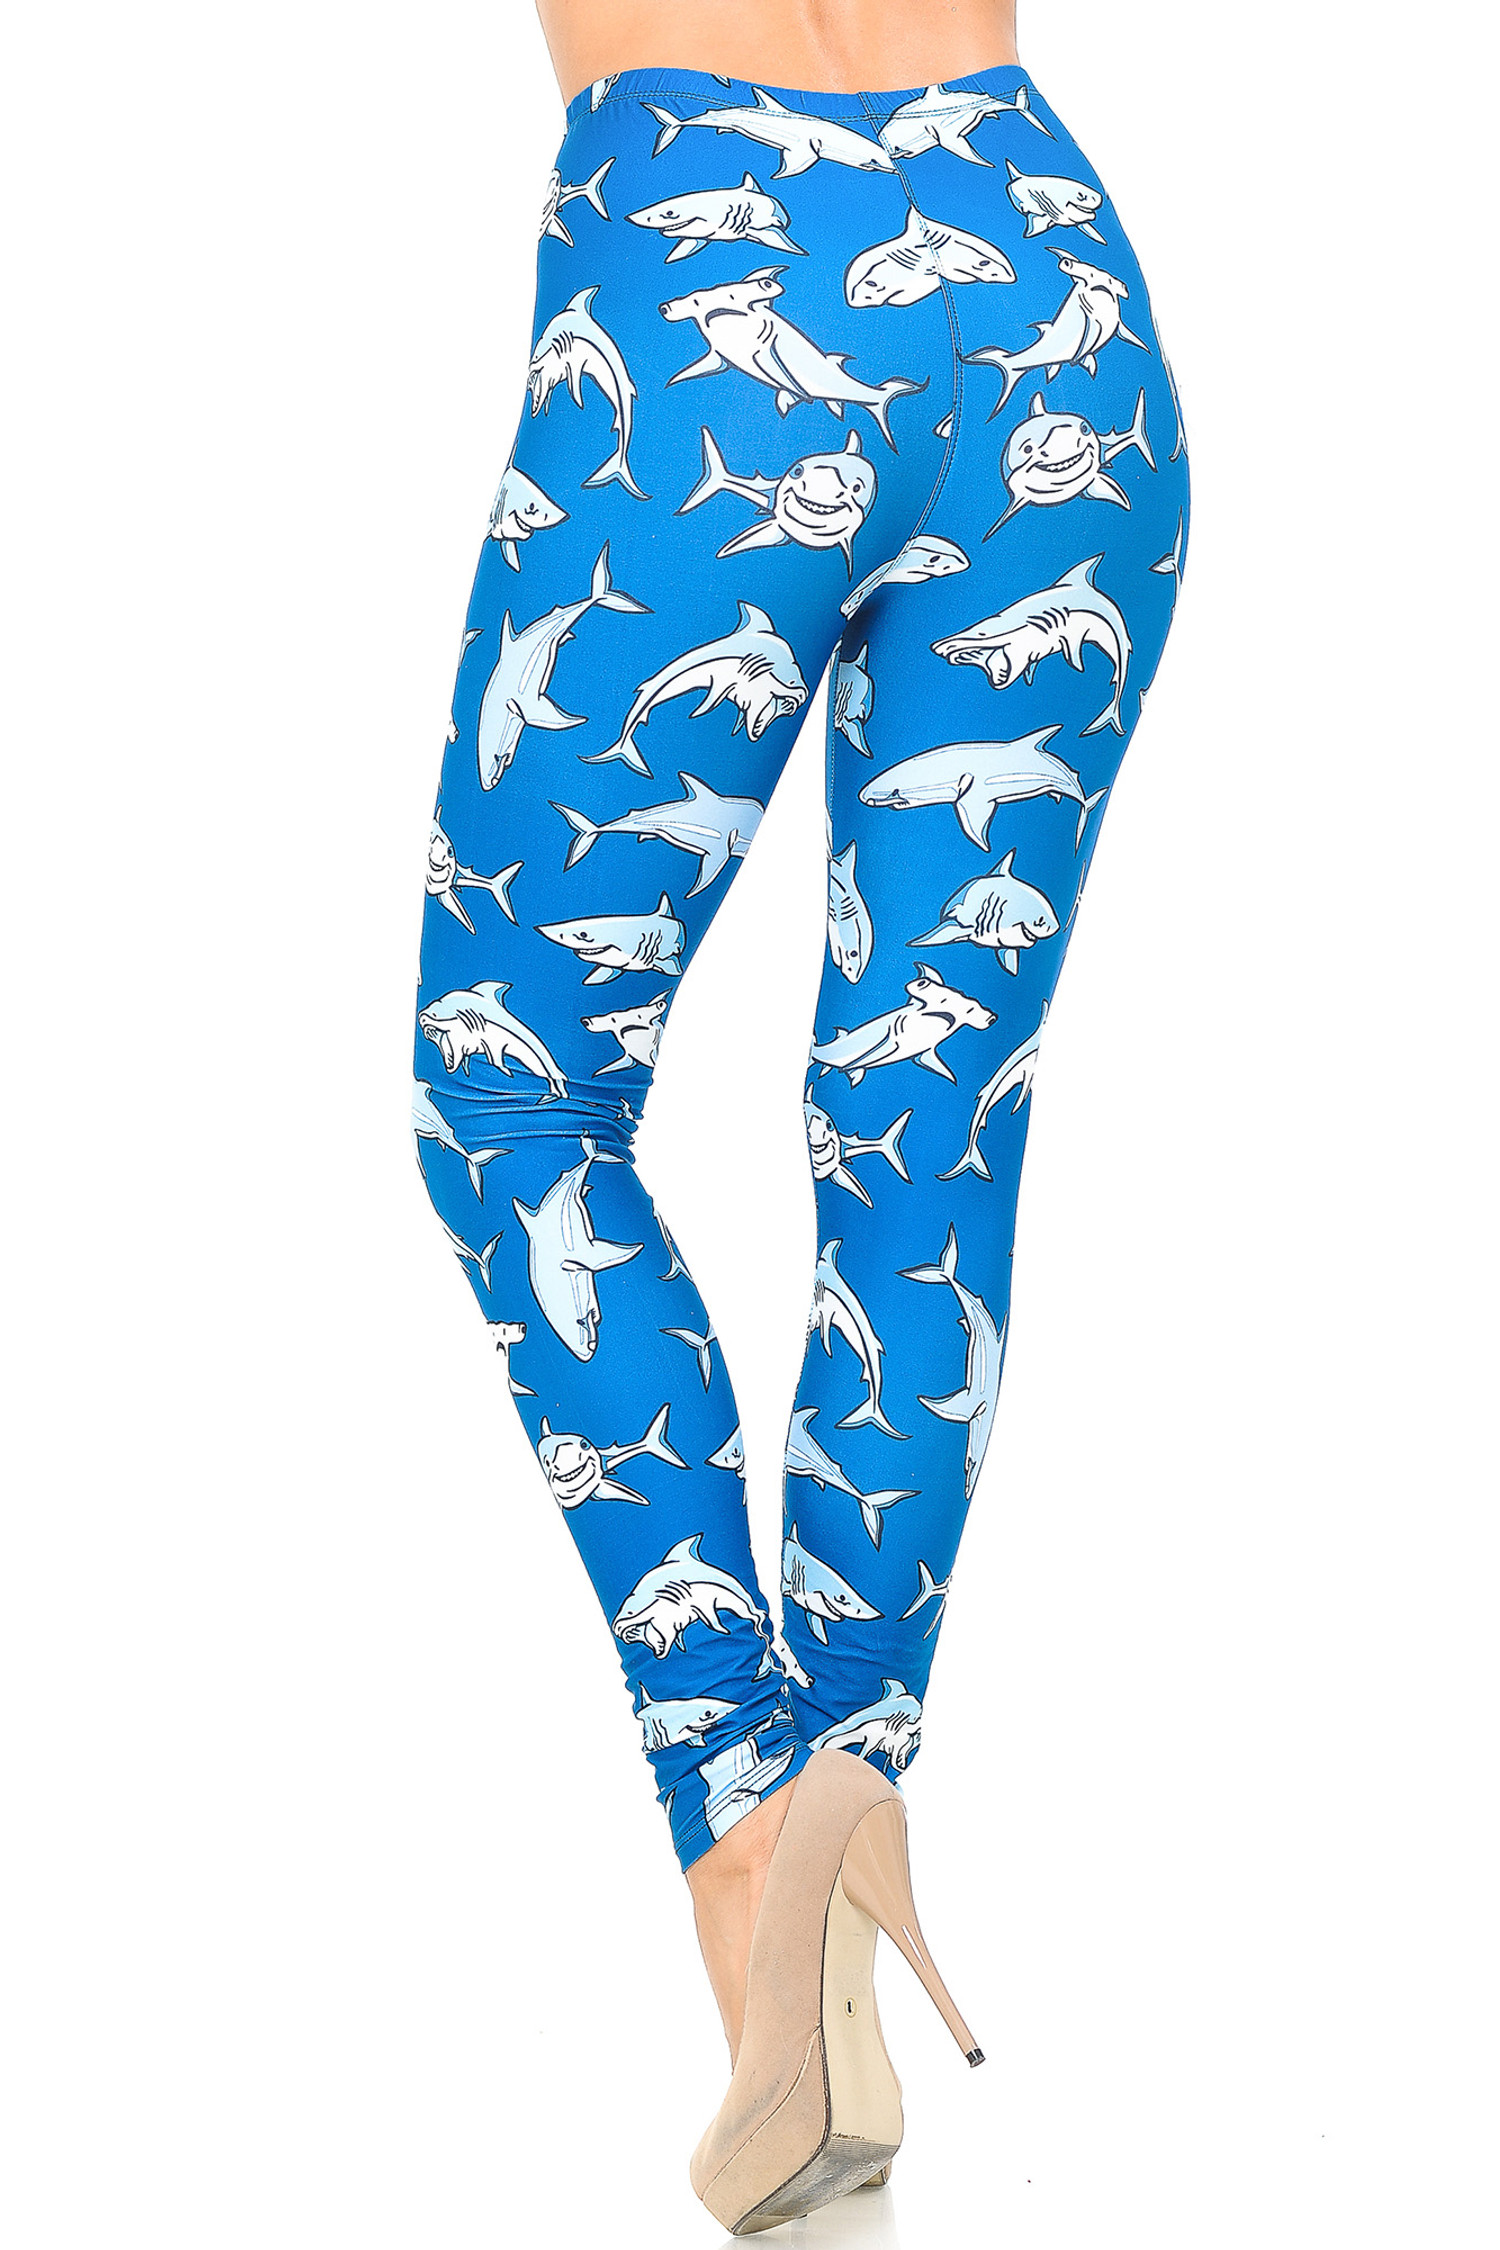 Creamy Soft Shark Leggings - USA Fashion™